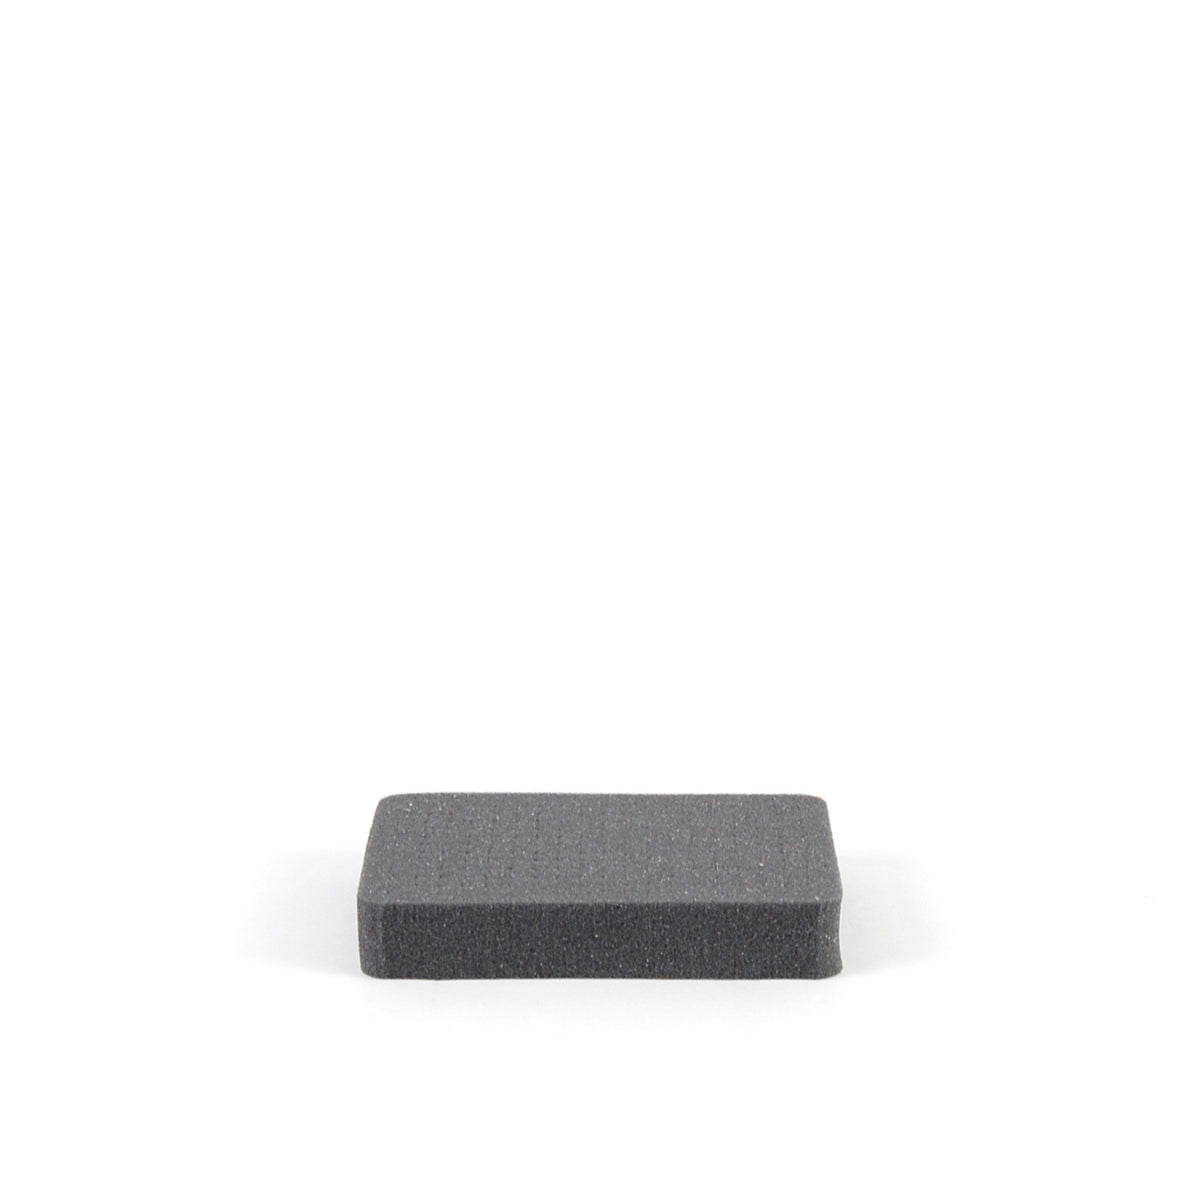 Pelican™ Micro Case Foam